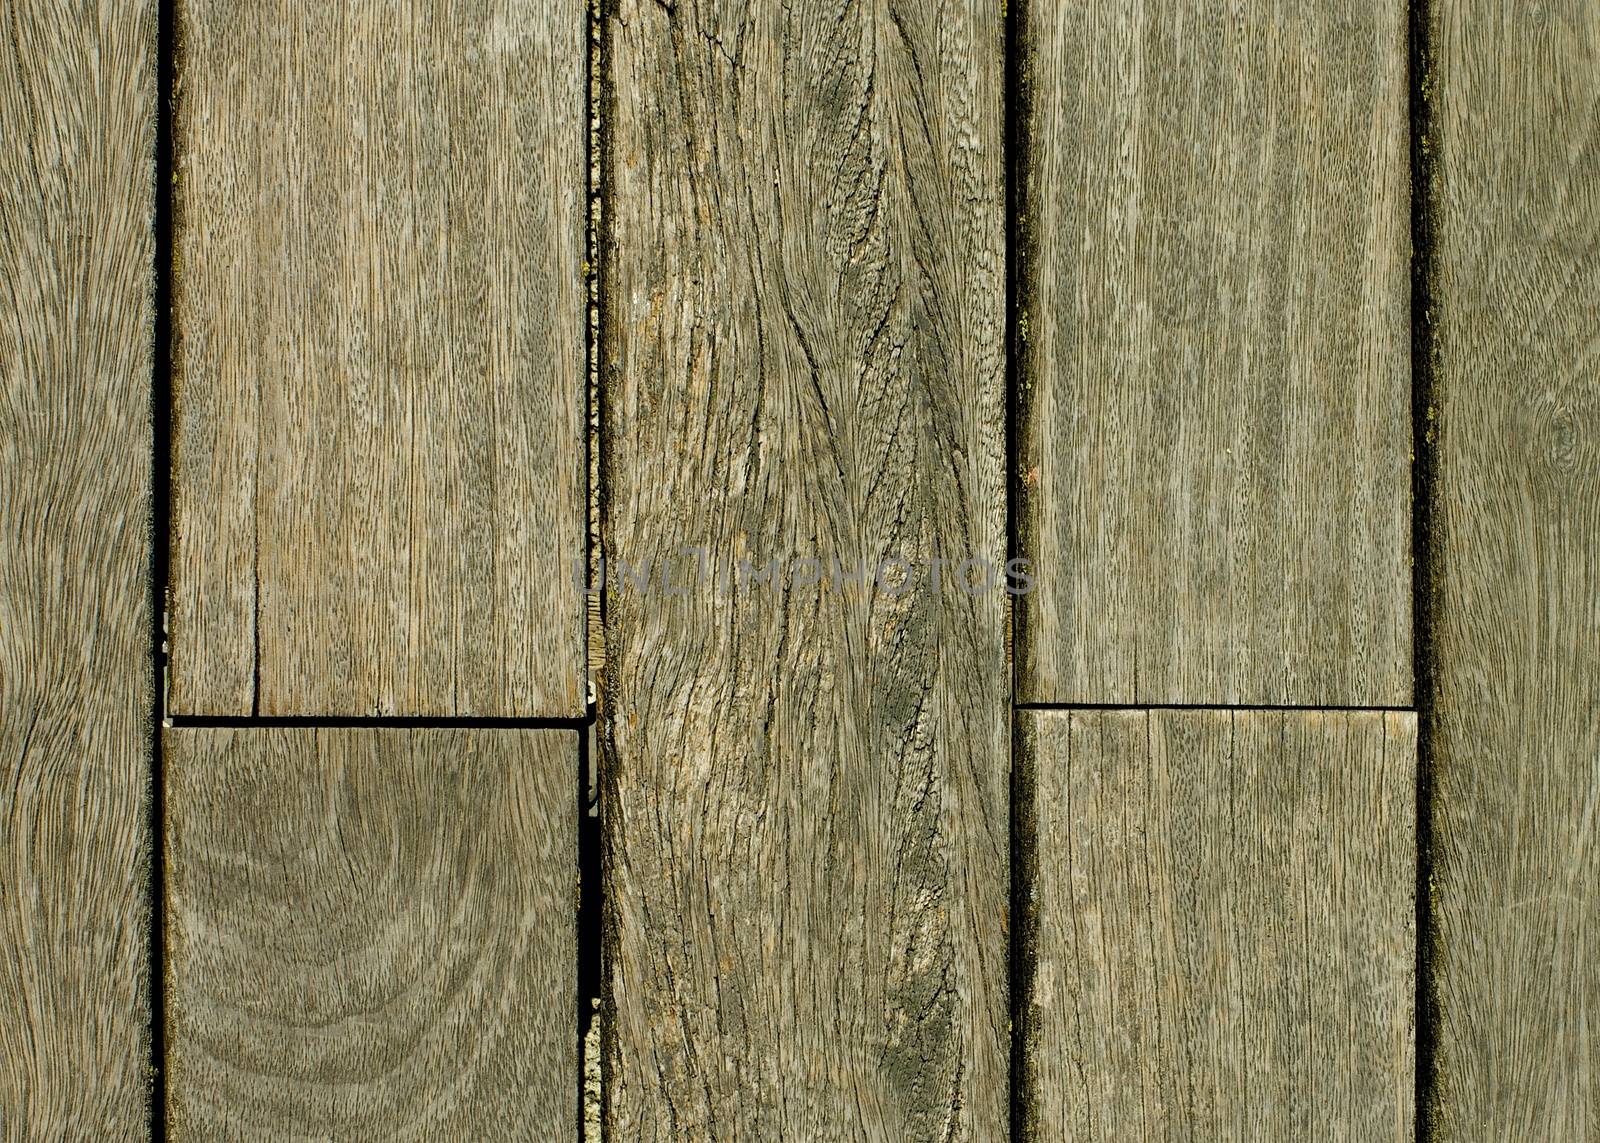 Wooden Plank Background by zhekos